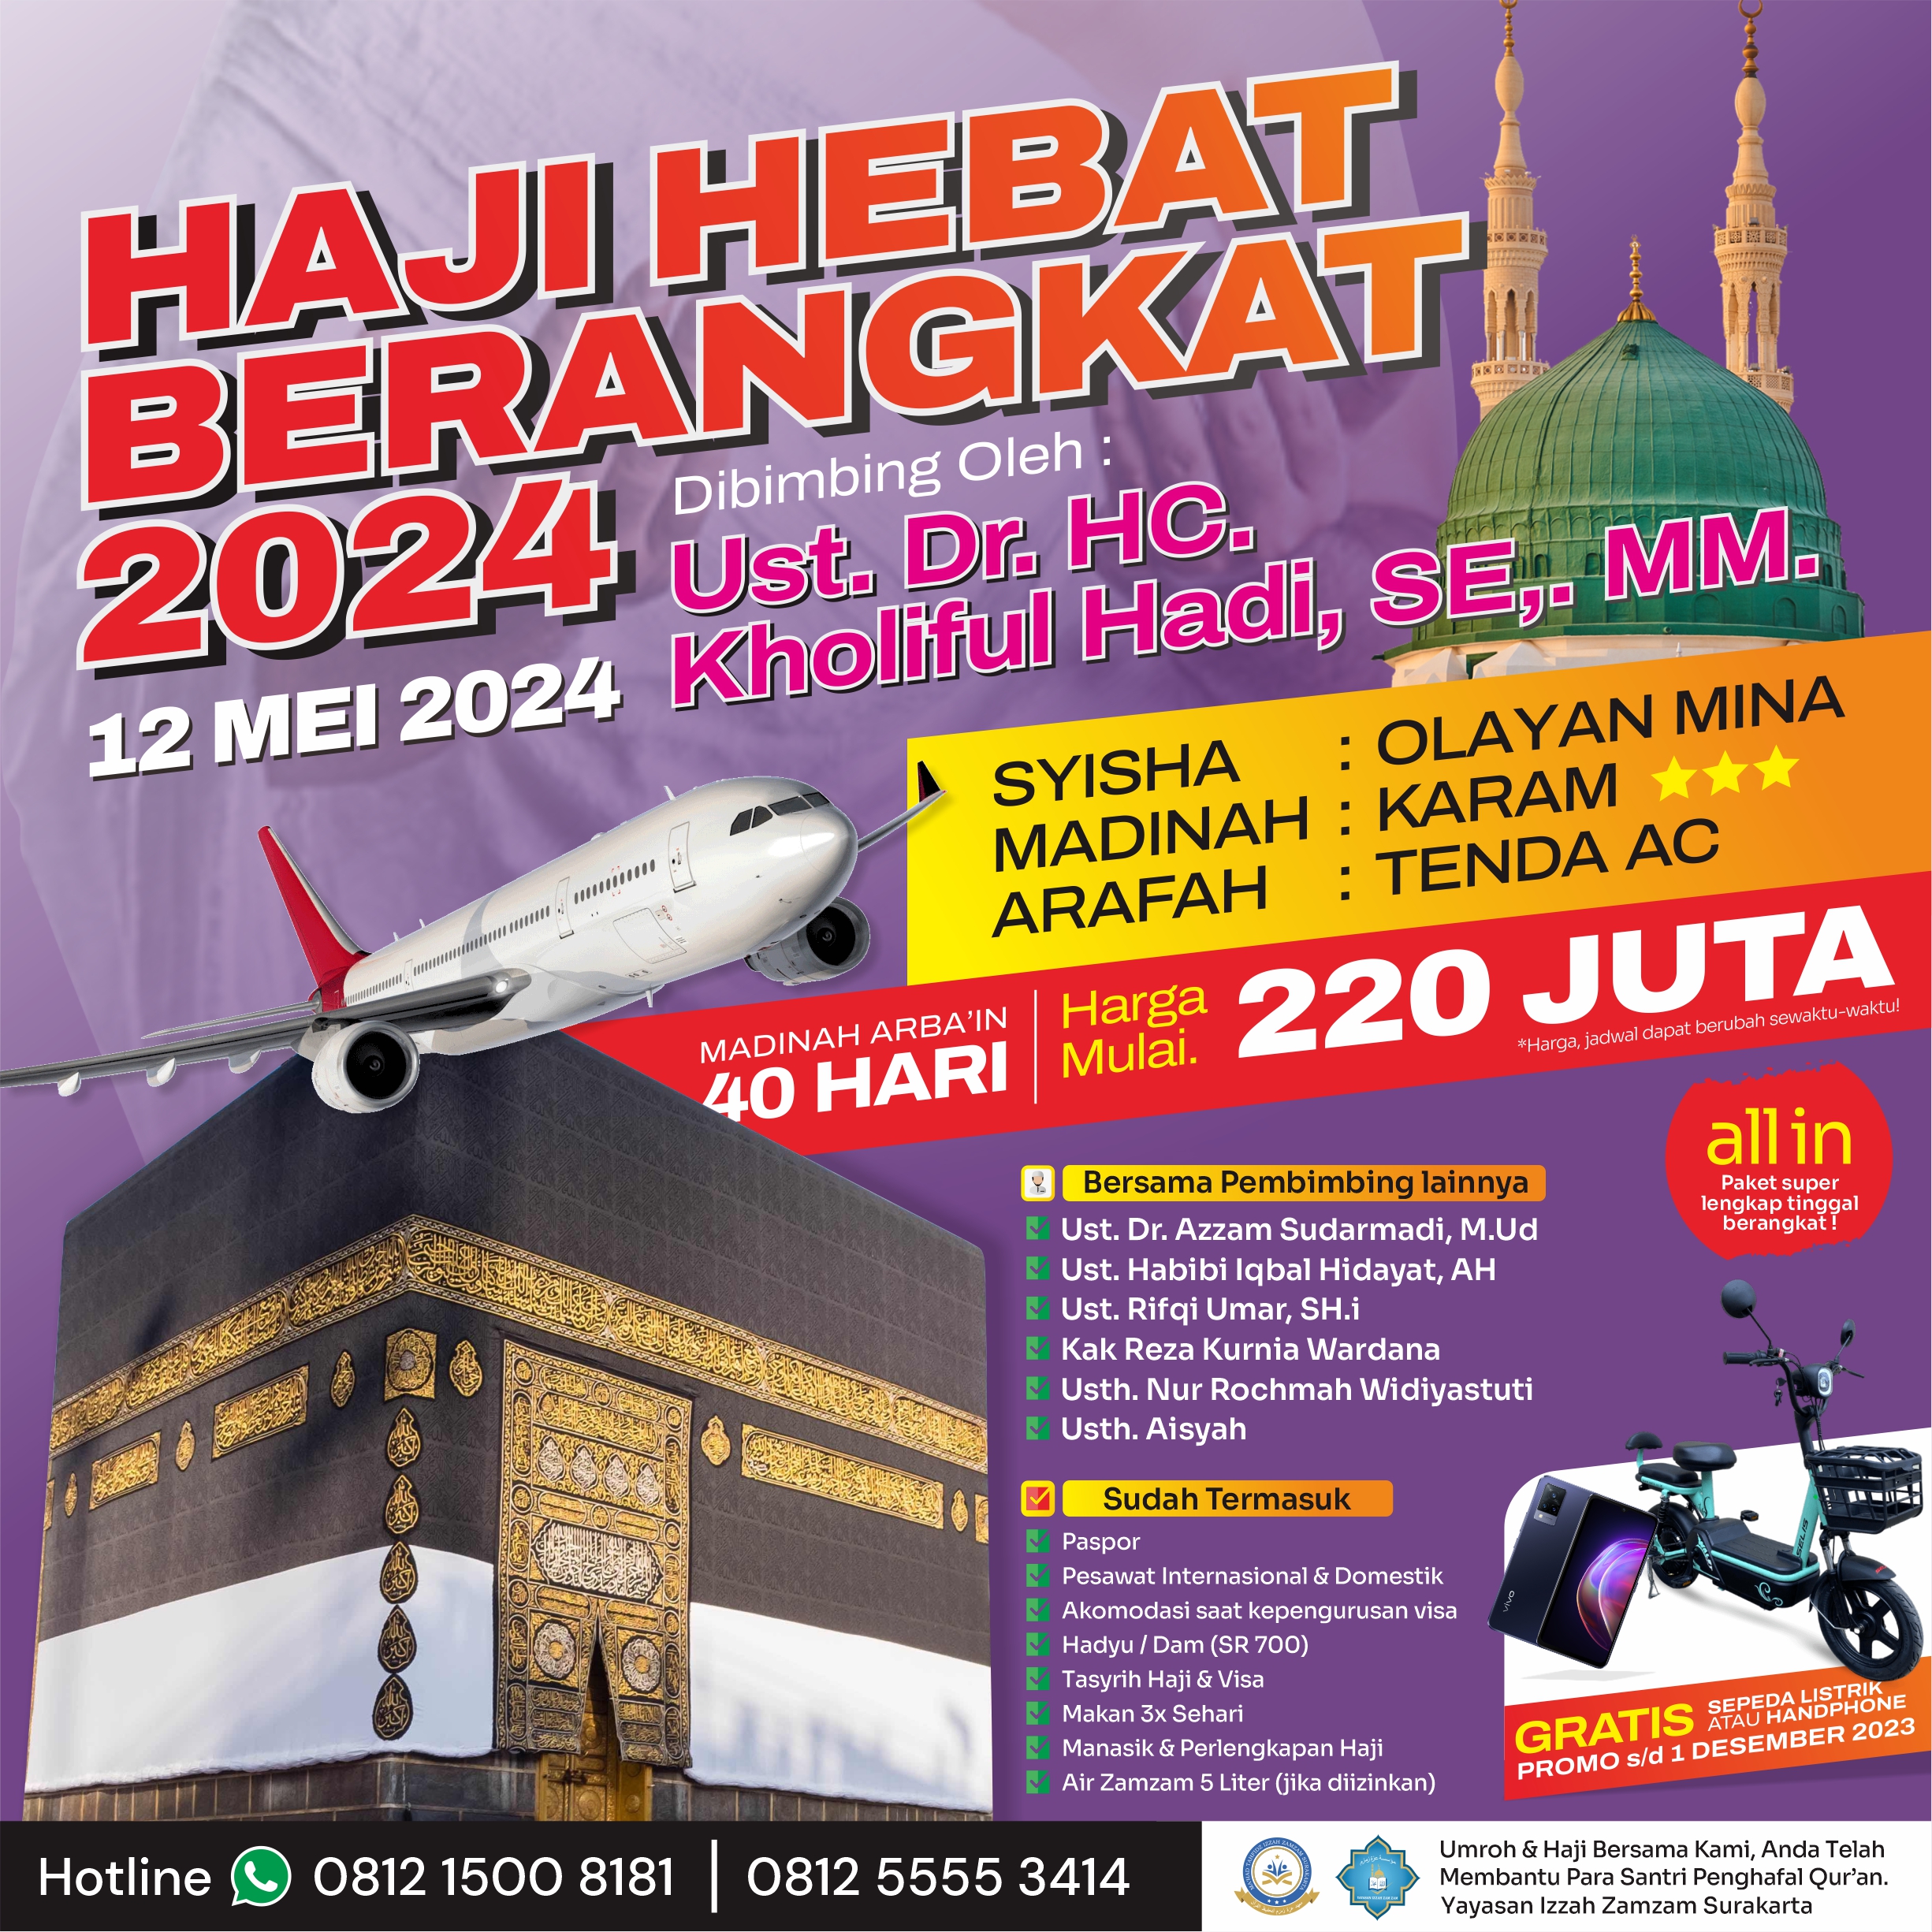 Haji Hebat Berangkat 2024 - PT. Amanu